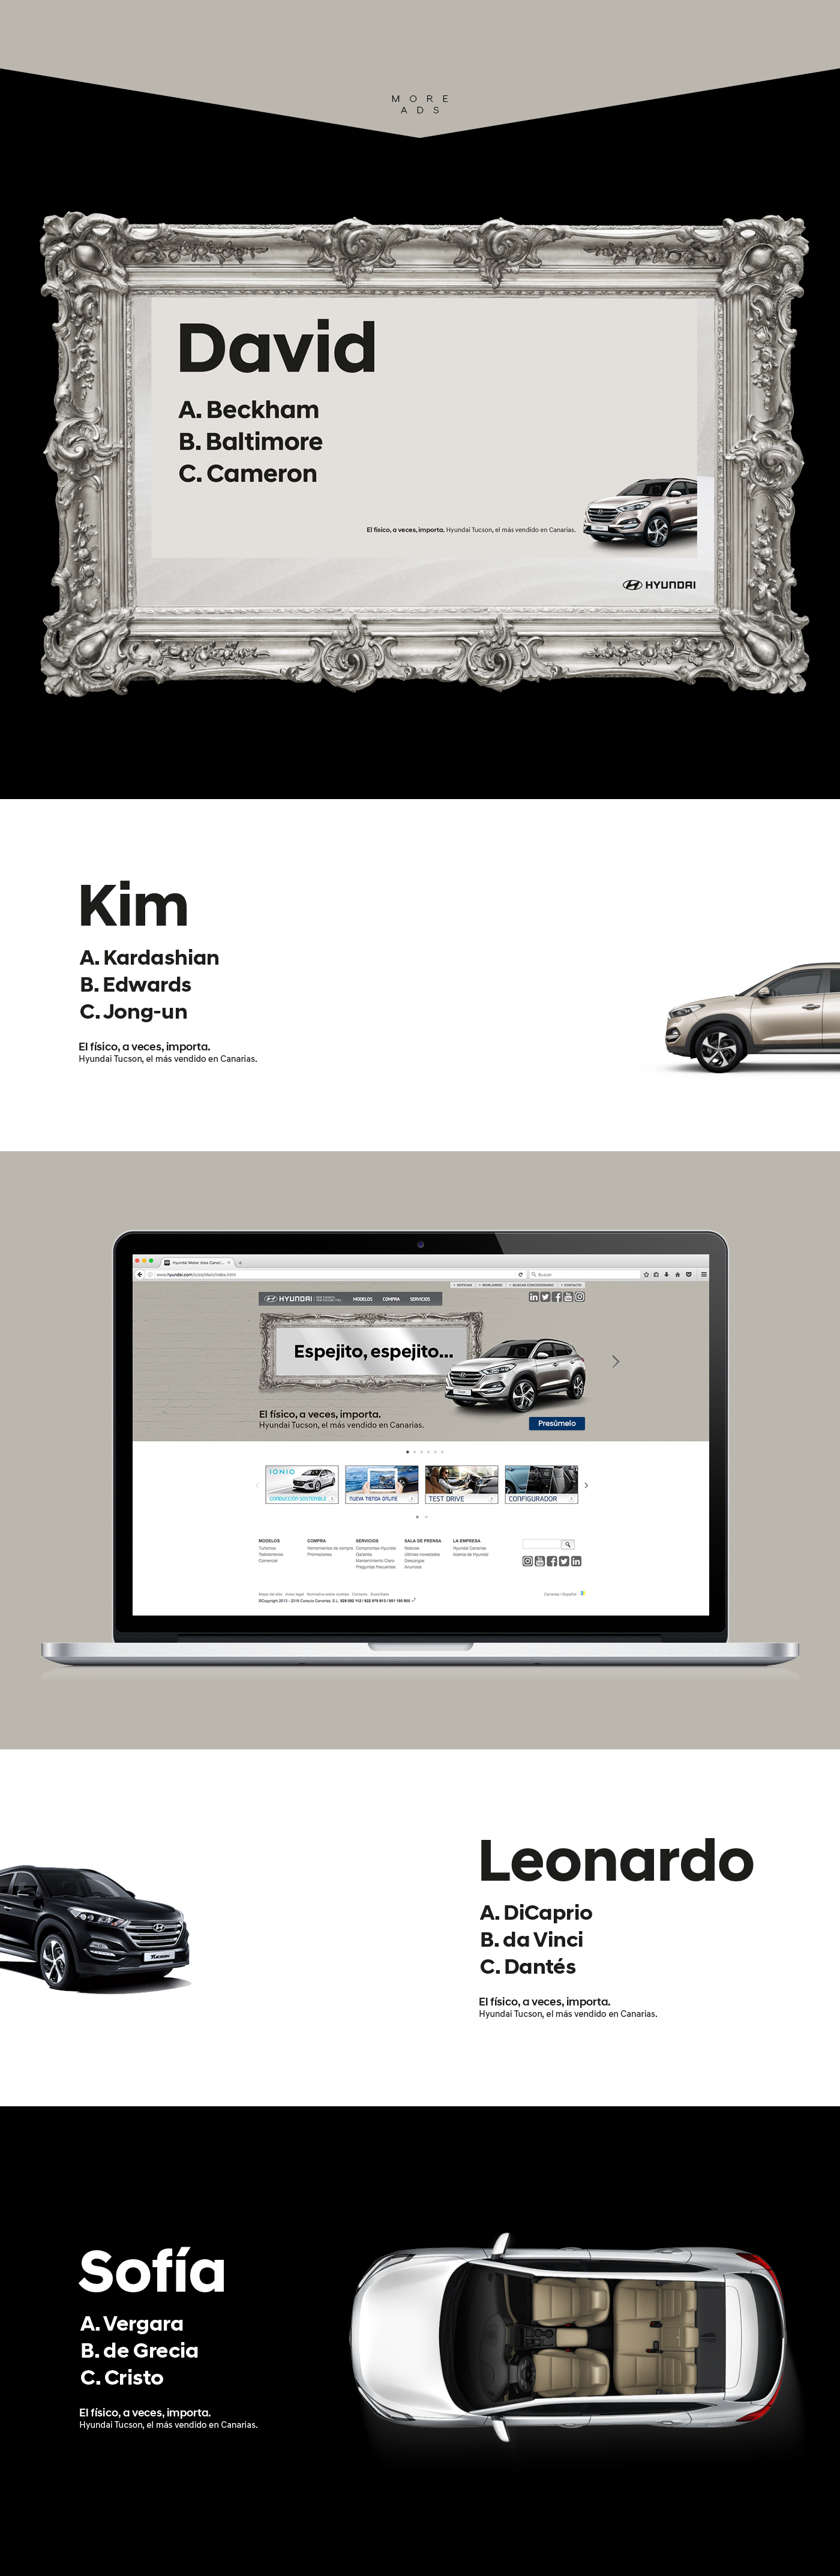 gcuberos ads car best minimal Spot copy new tucson Hyundai